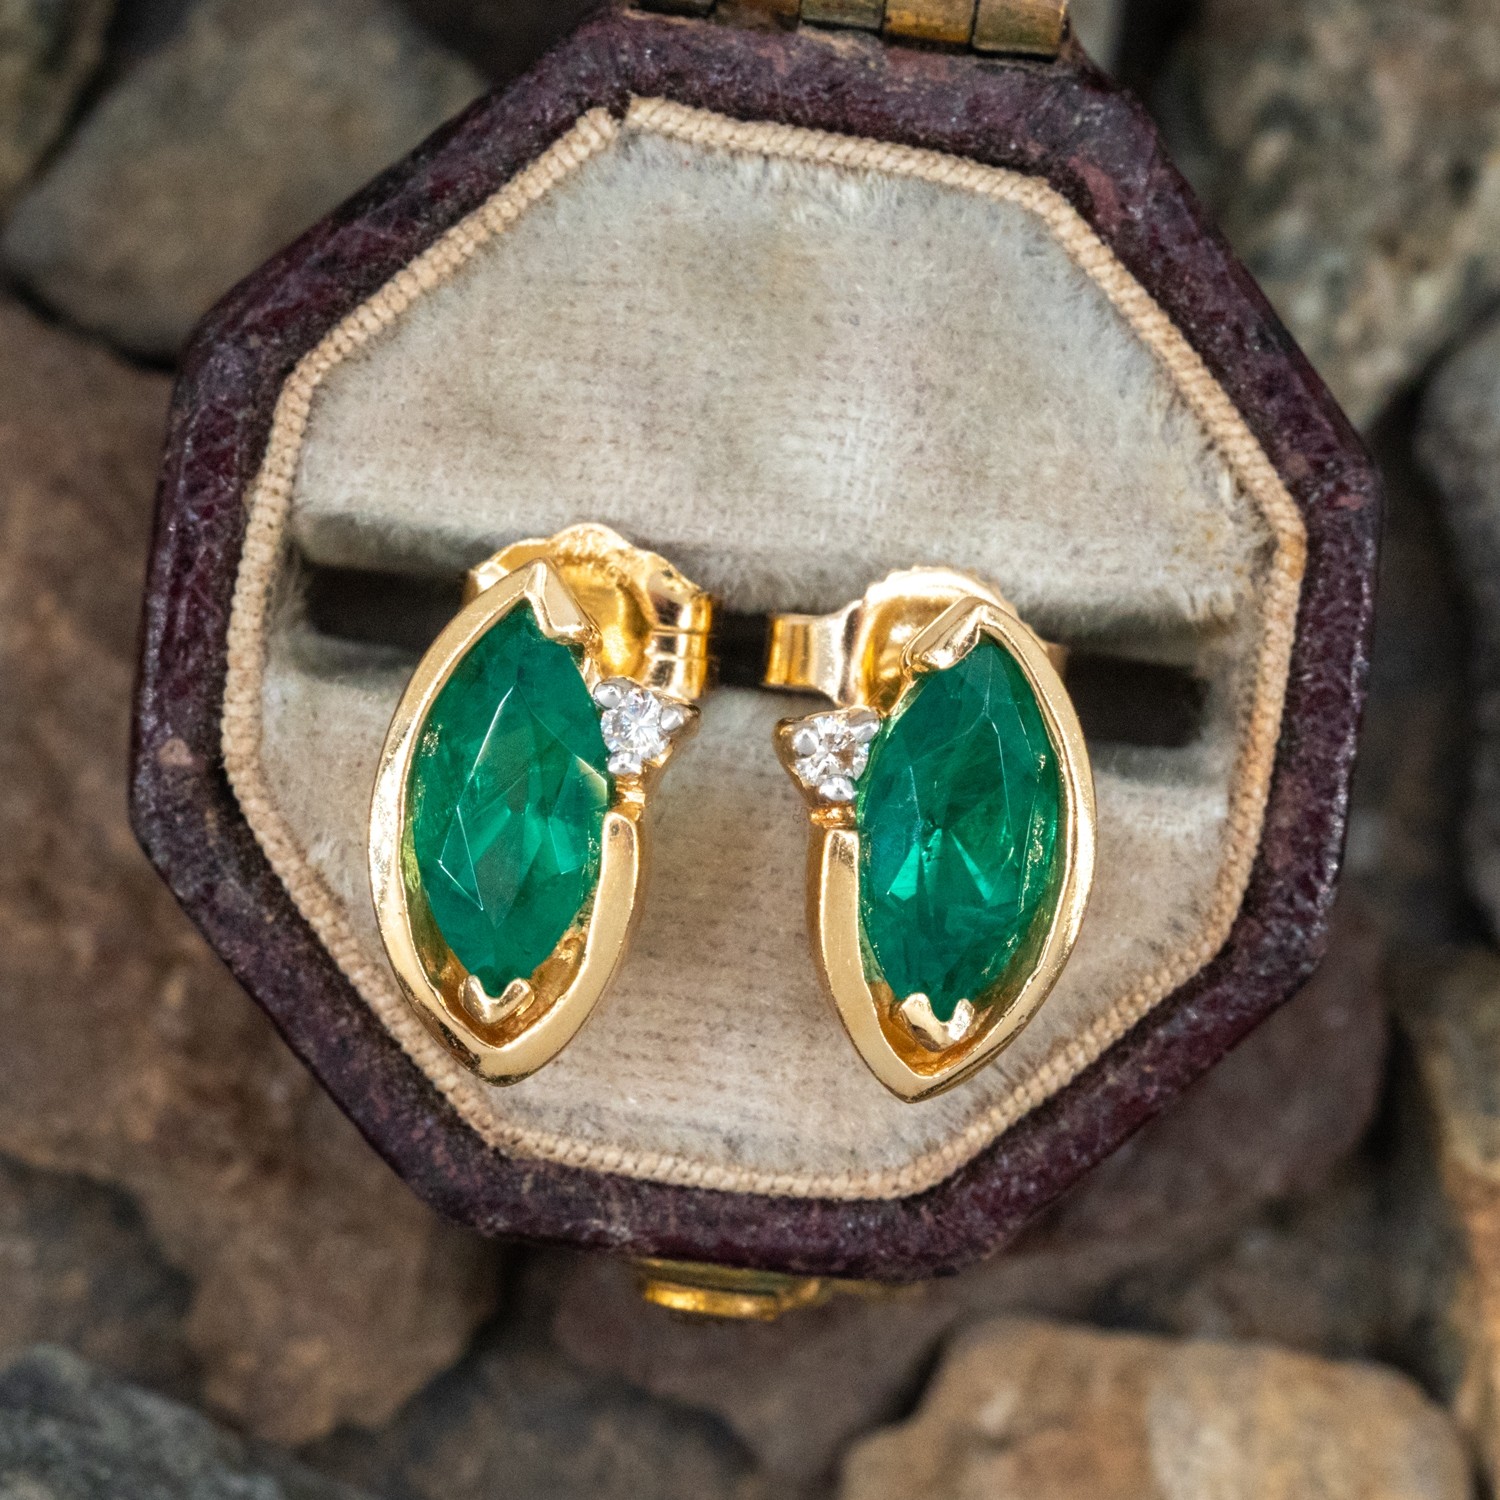 Vintage Style Art Deco Revival Emerald Green Glass Crystal Statement  EARRINGS | eBay